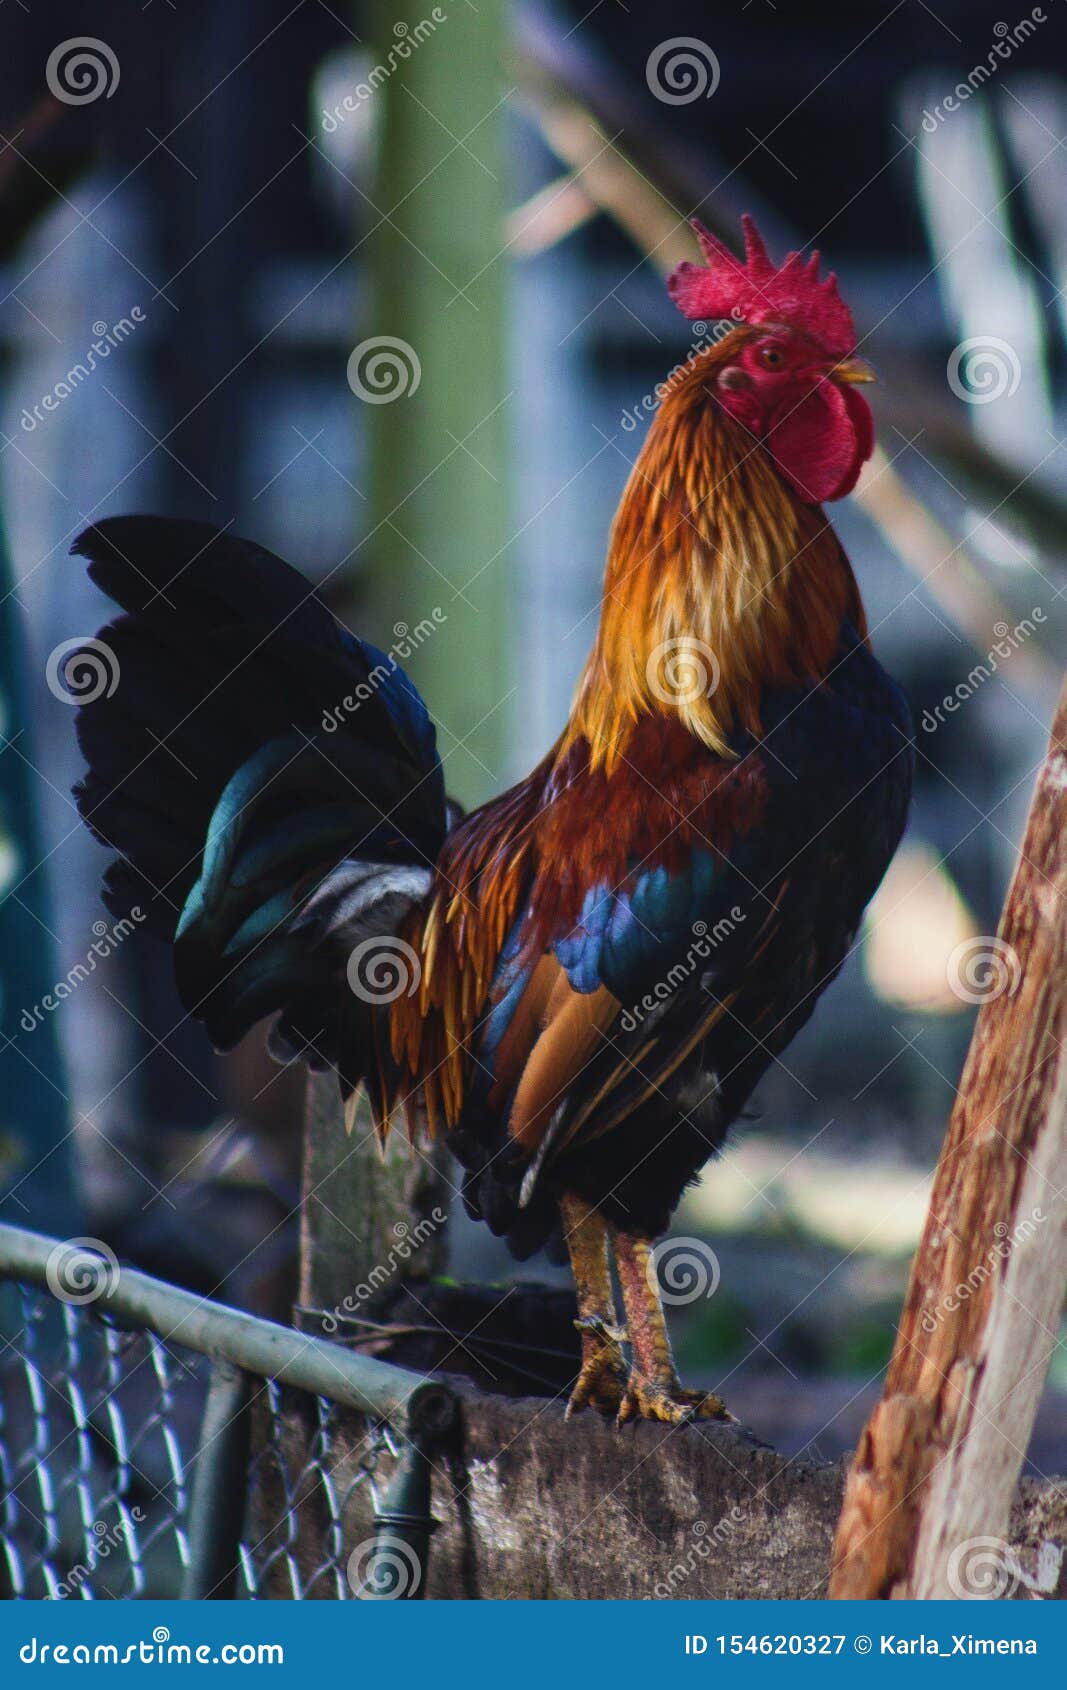 rooster preparing to sing